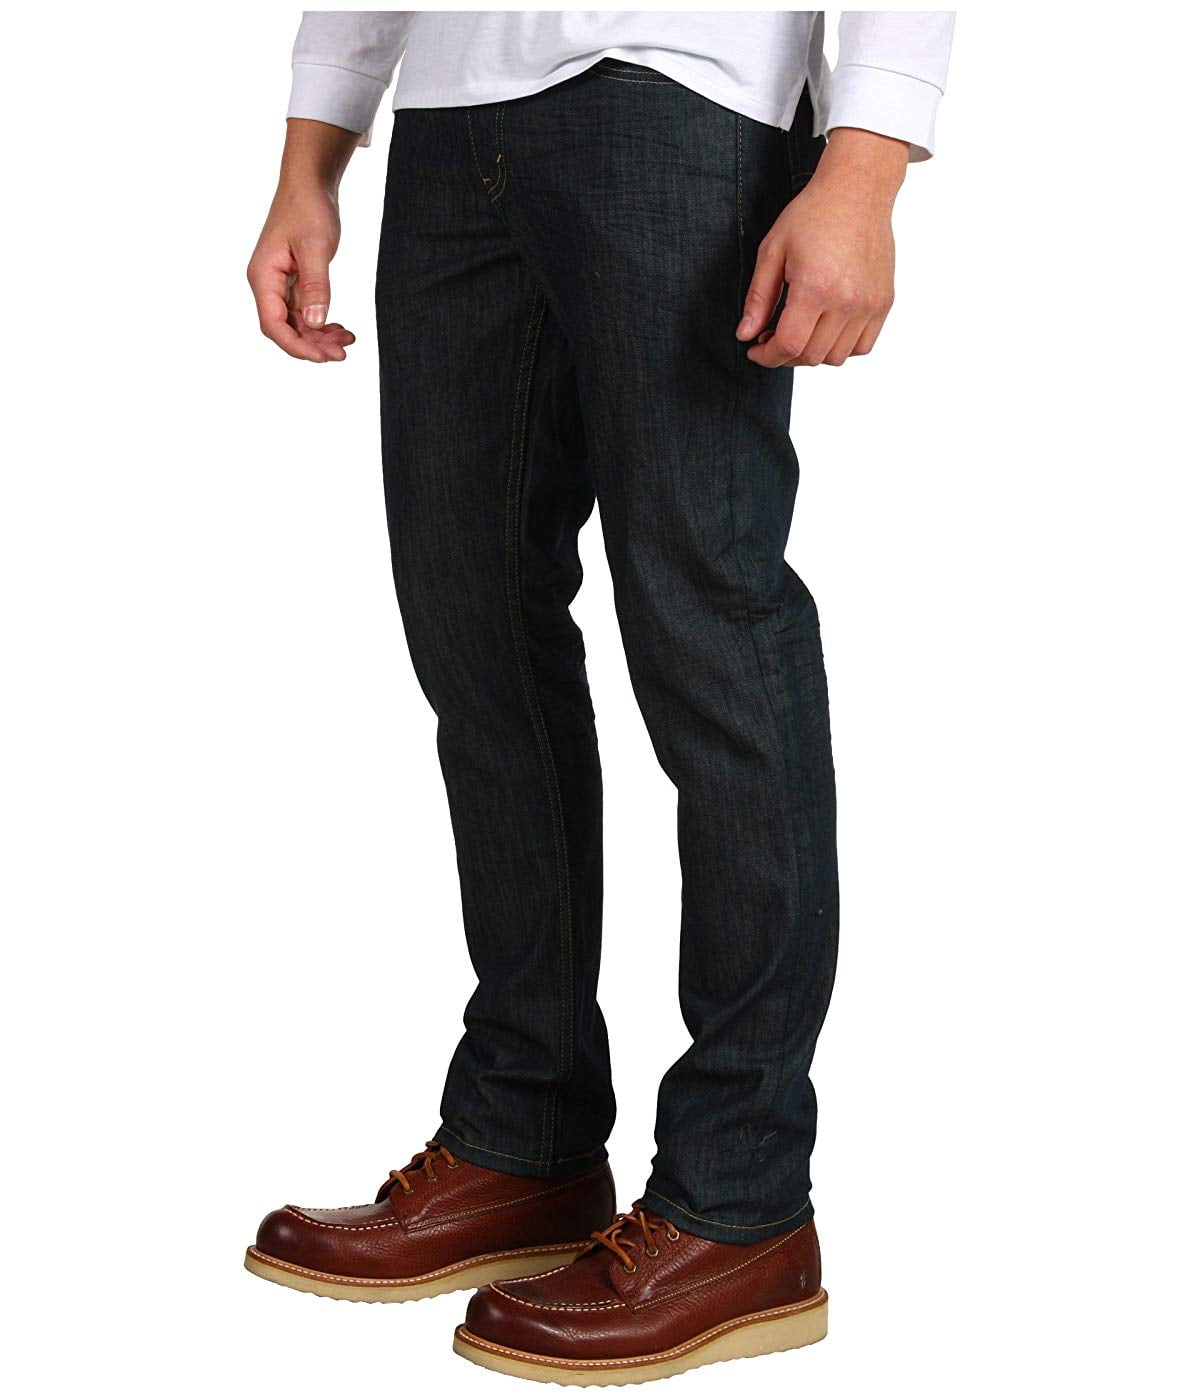 NWT Levi's 511 Men's Slim Fit Stretch Dark Blue Jeans Faded